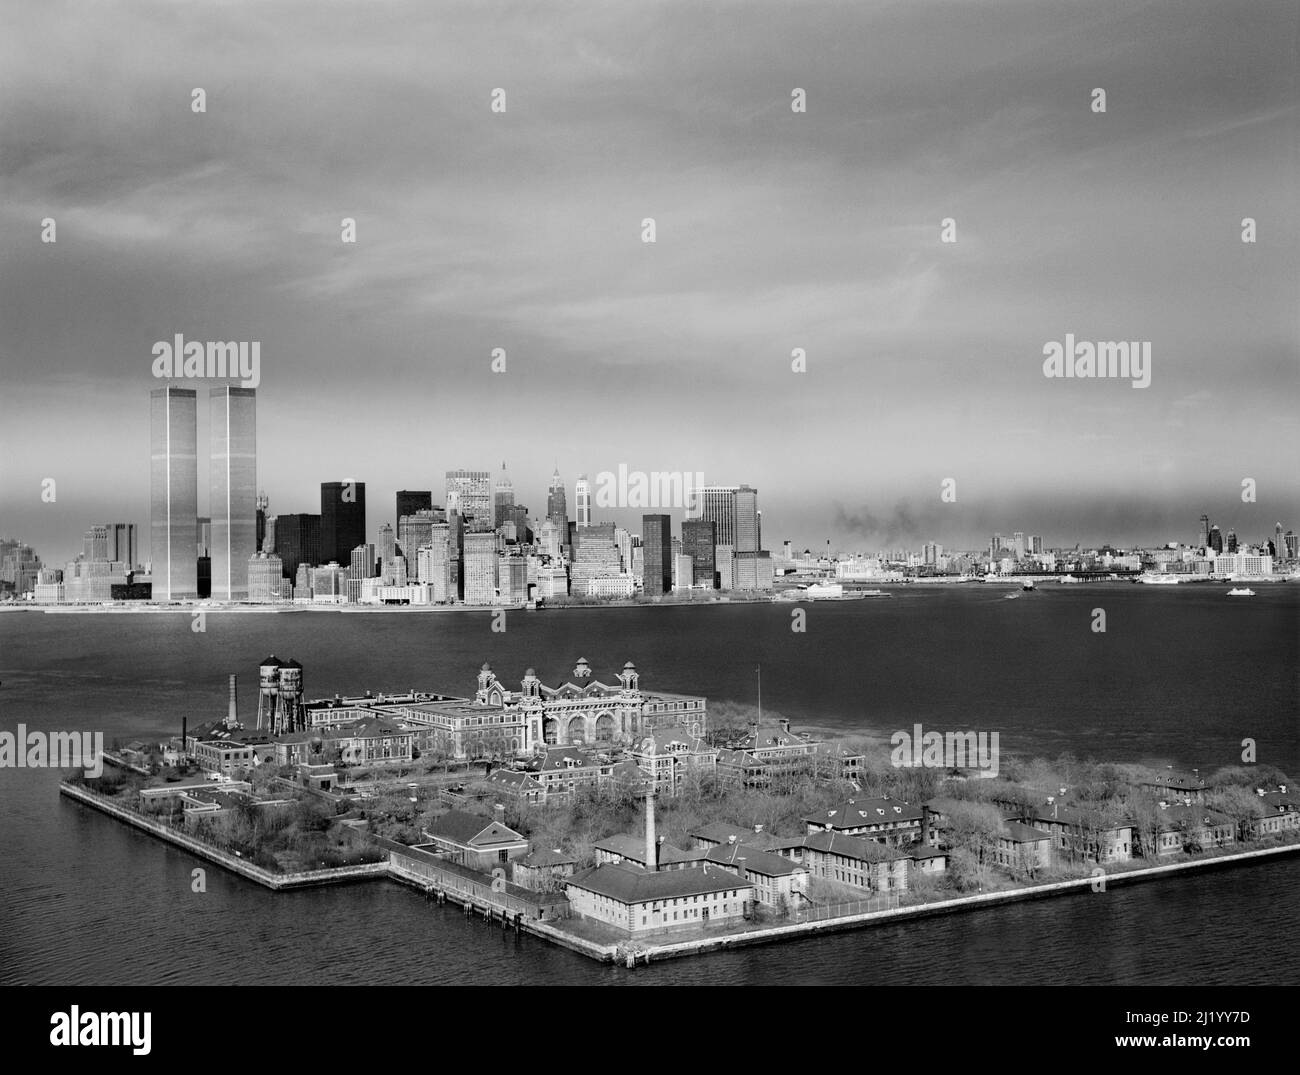 Ellis Island con Manhattan Skyline sullo sfondo, World Trade Center Towers a sinistra, New York City, New York, USA, Historic American Buildings Survey Collection, anni '70 Foto Stock